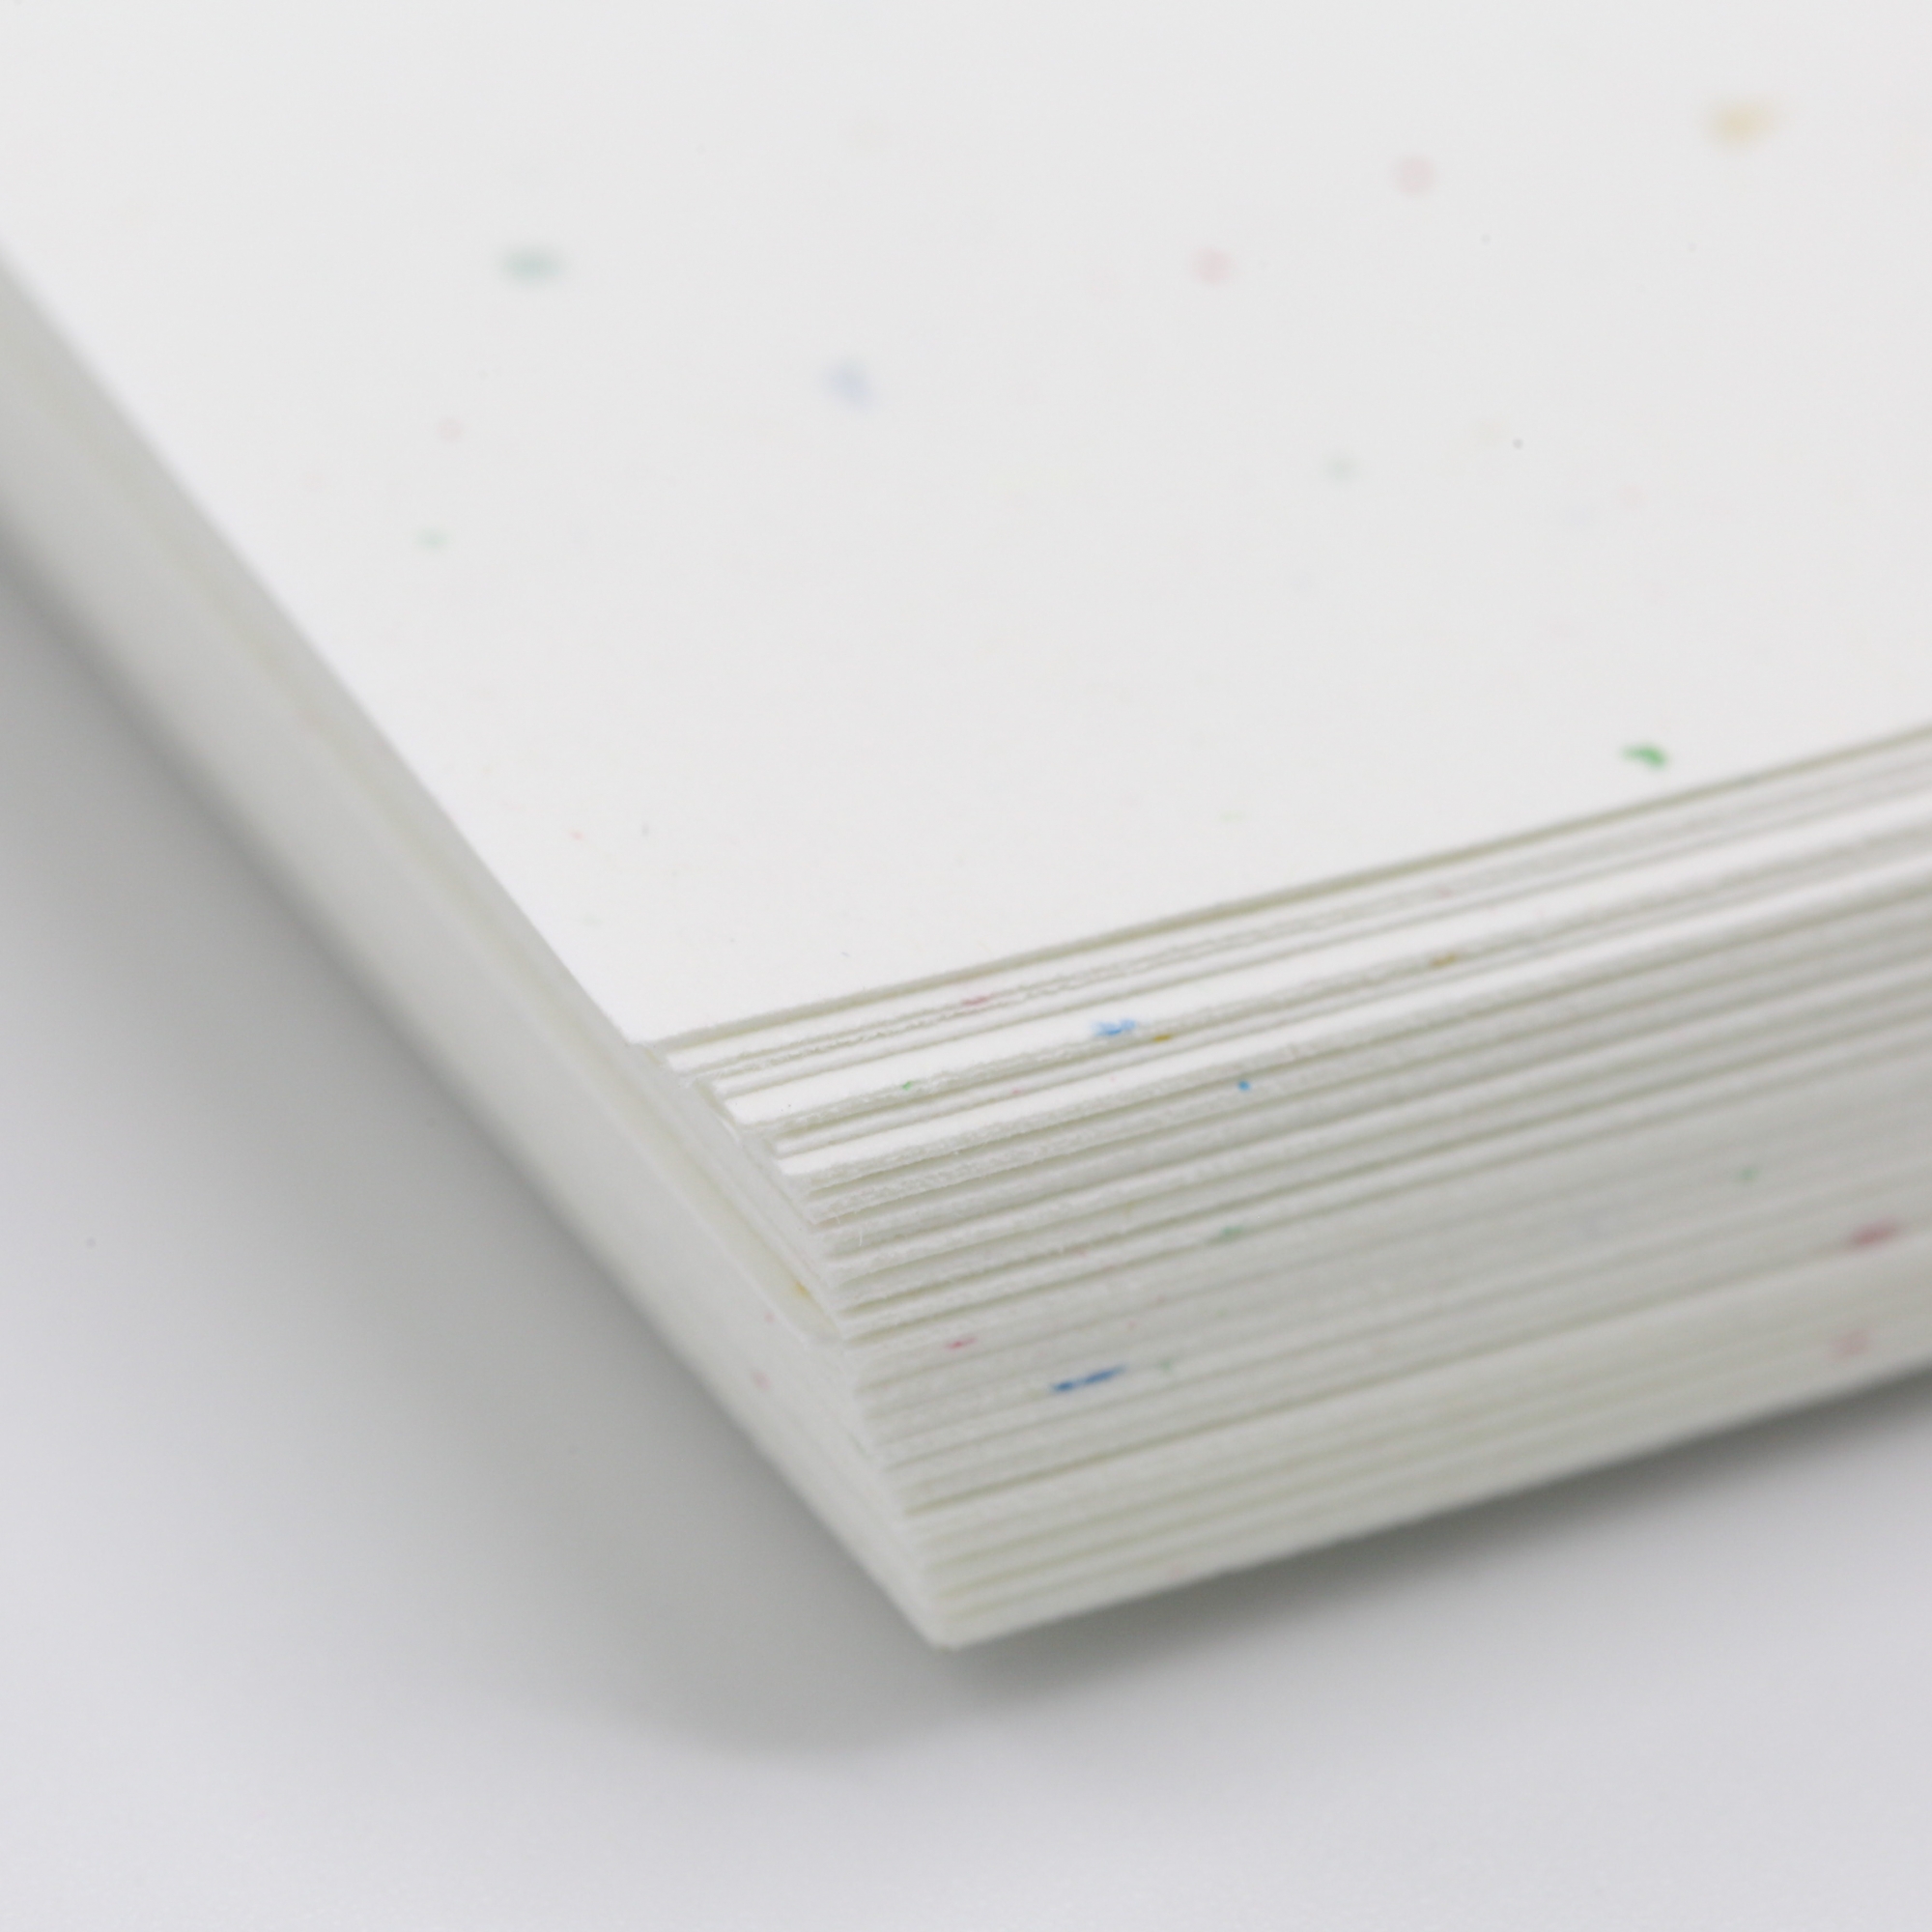 Astrobrights Color Paper, 24lb (90gsm), 8.5 x 11, 500 Sheets